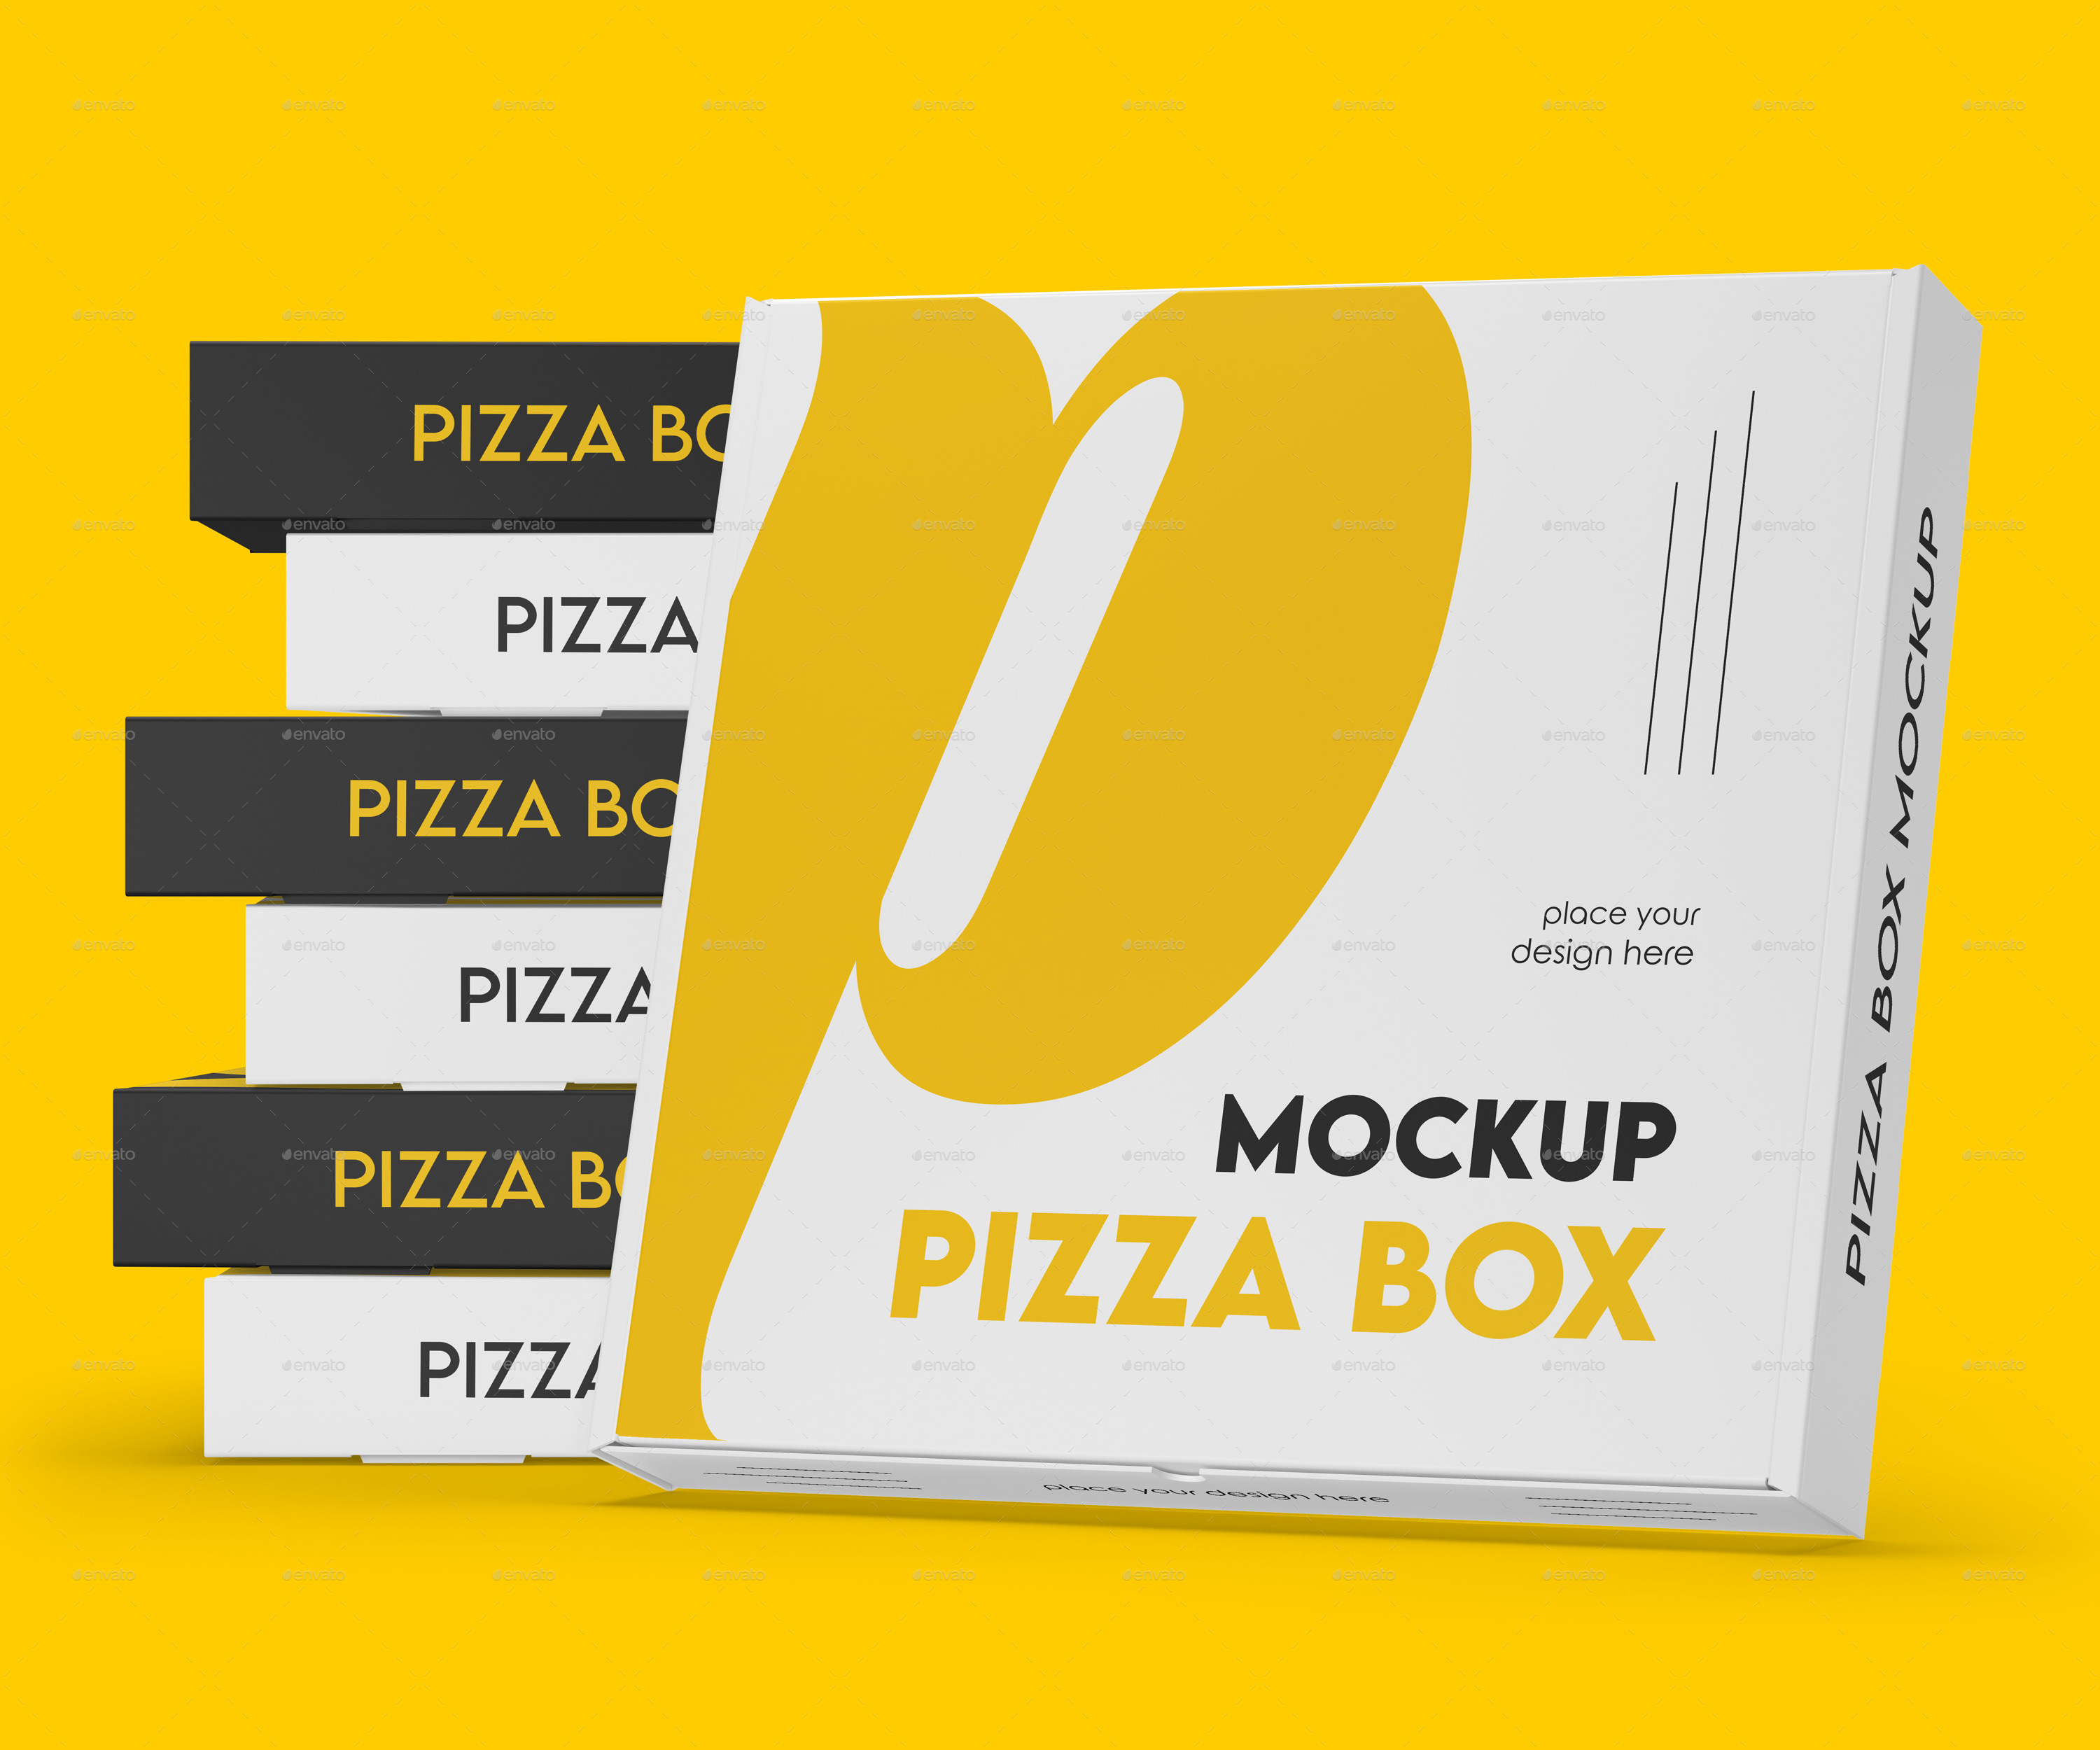 Pizza Box Packaging Design, Graphic Templates - Envato Elements